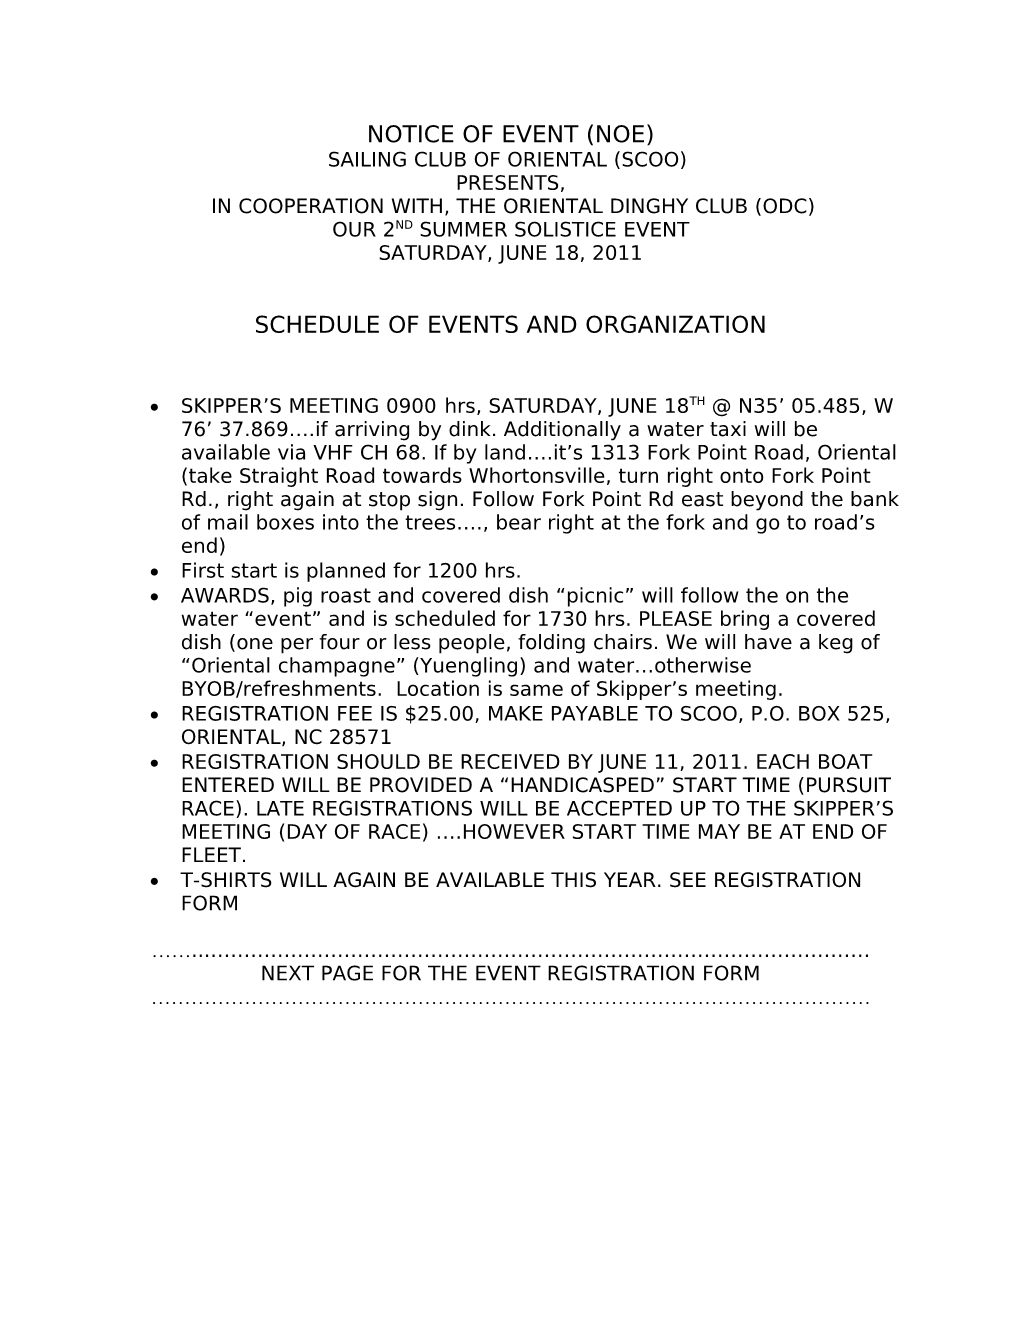 Notice of Event (Noe)